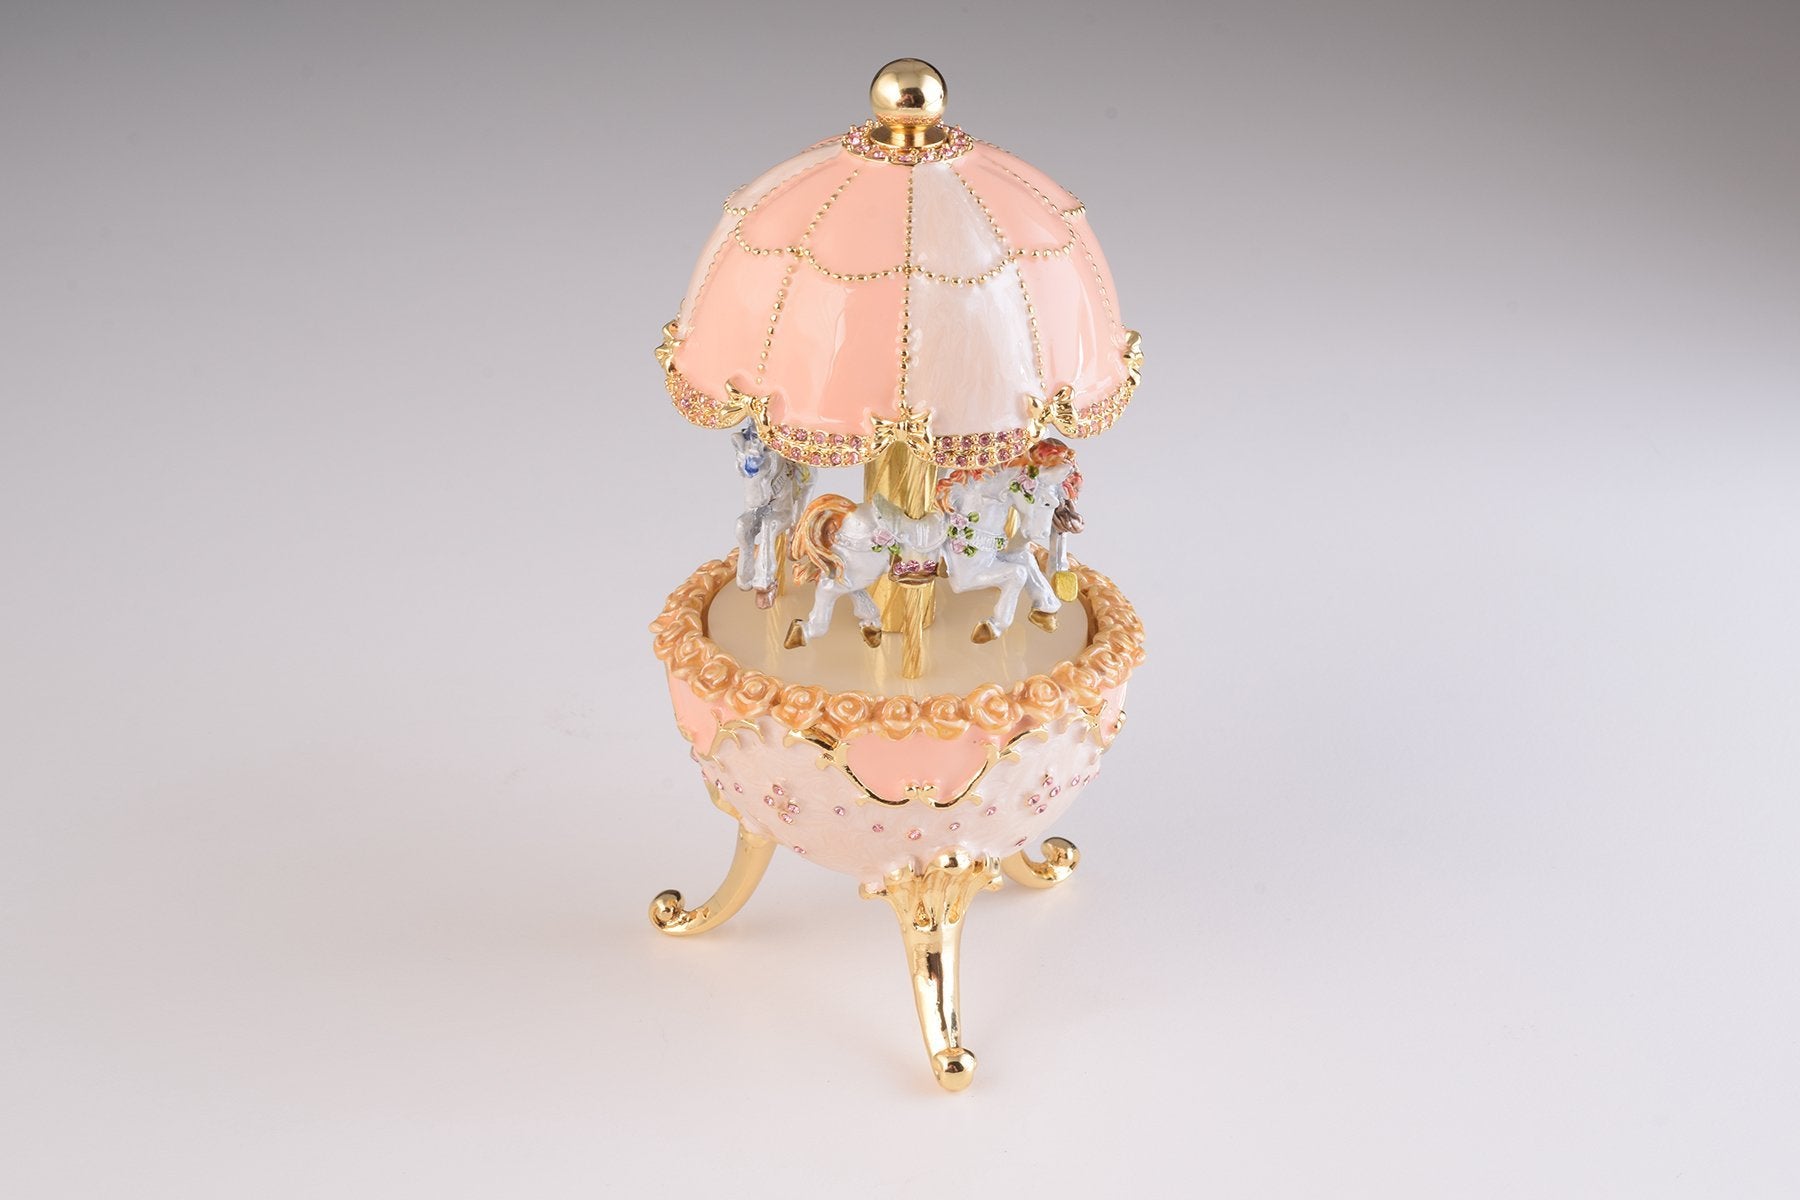 Keren Kopal Pink Wind up Carousel Faberge Egg  124.00